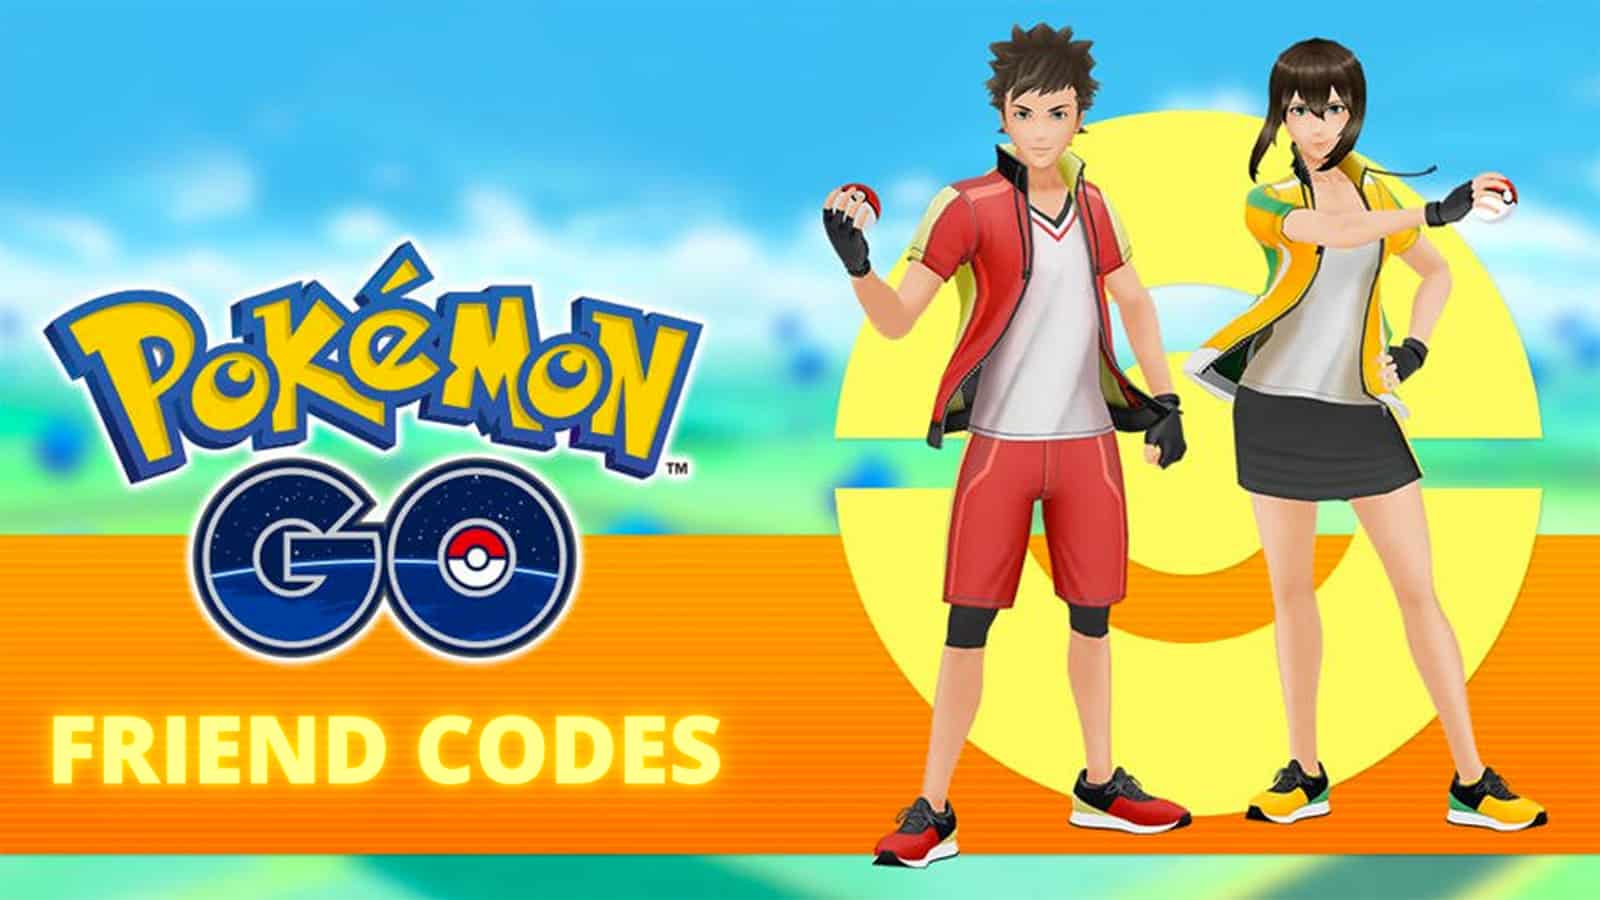 Pokemon Go': Promo Codes List for January 2021